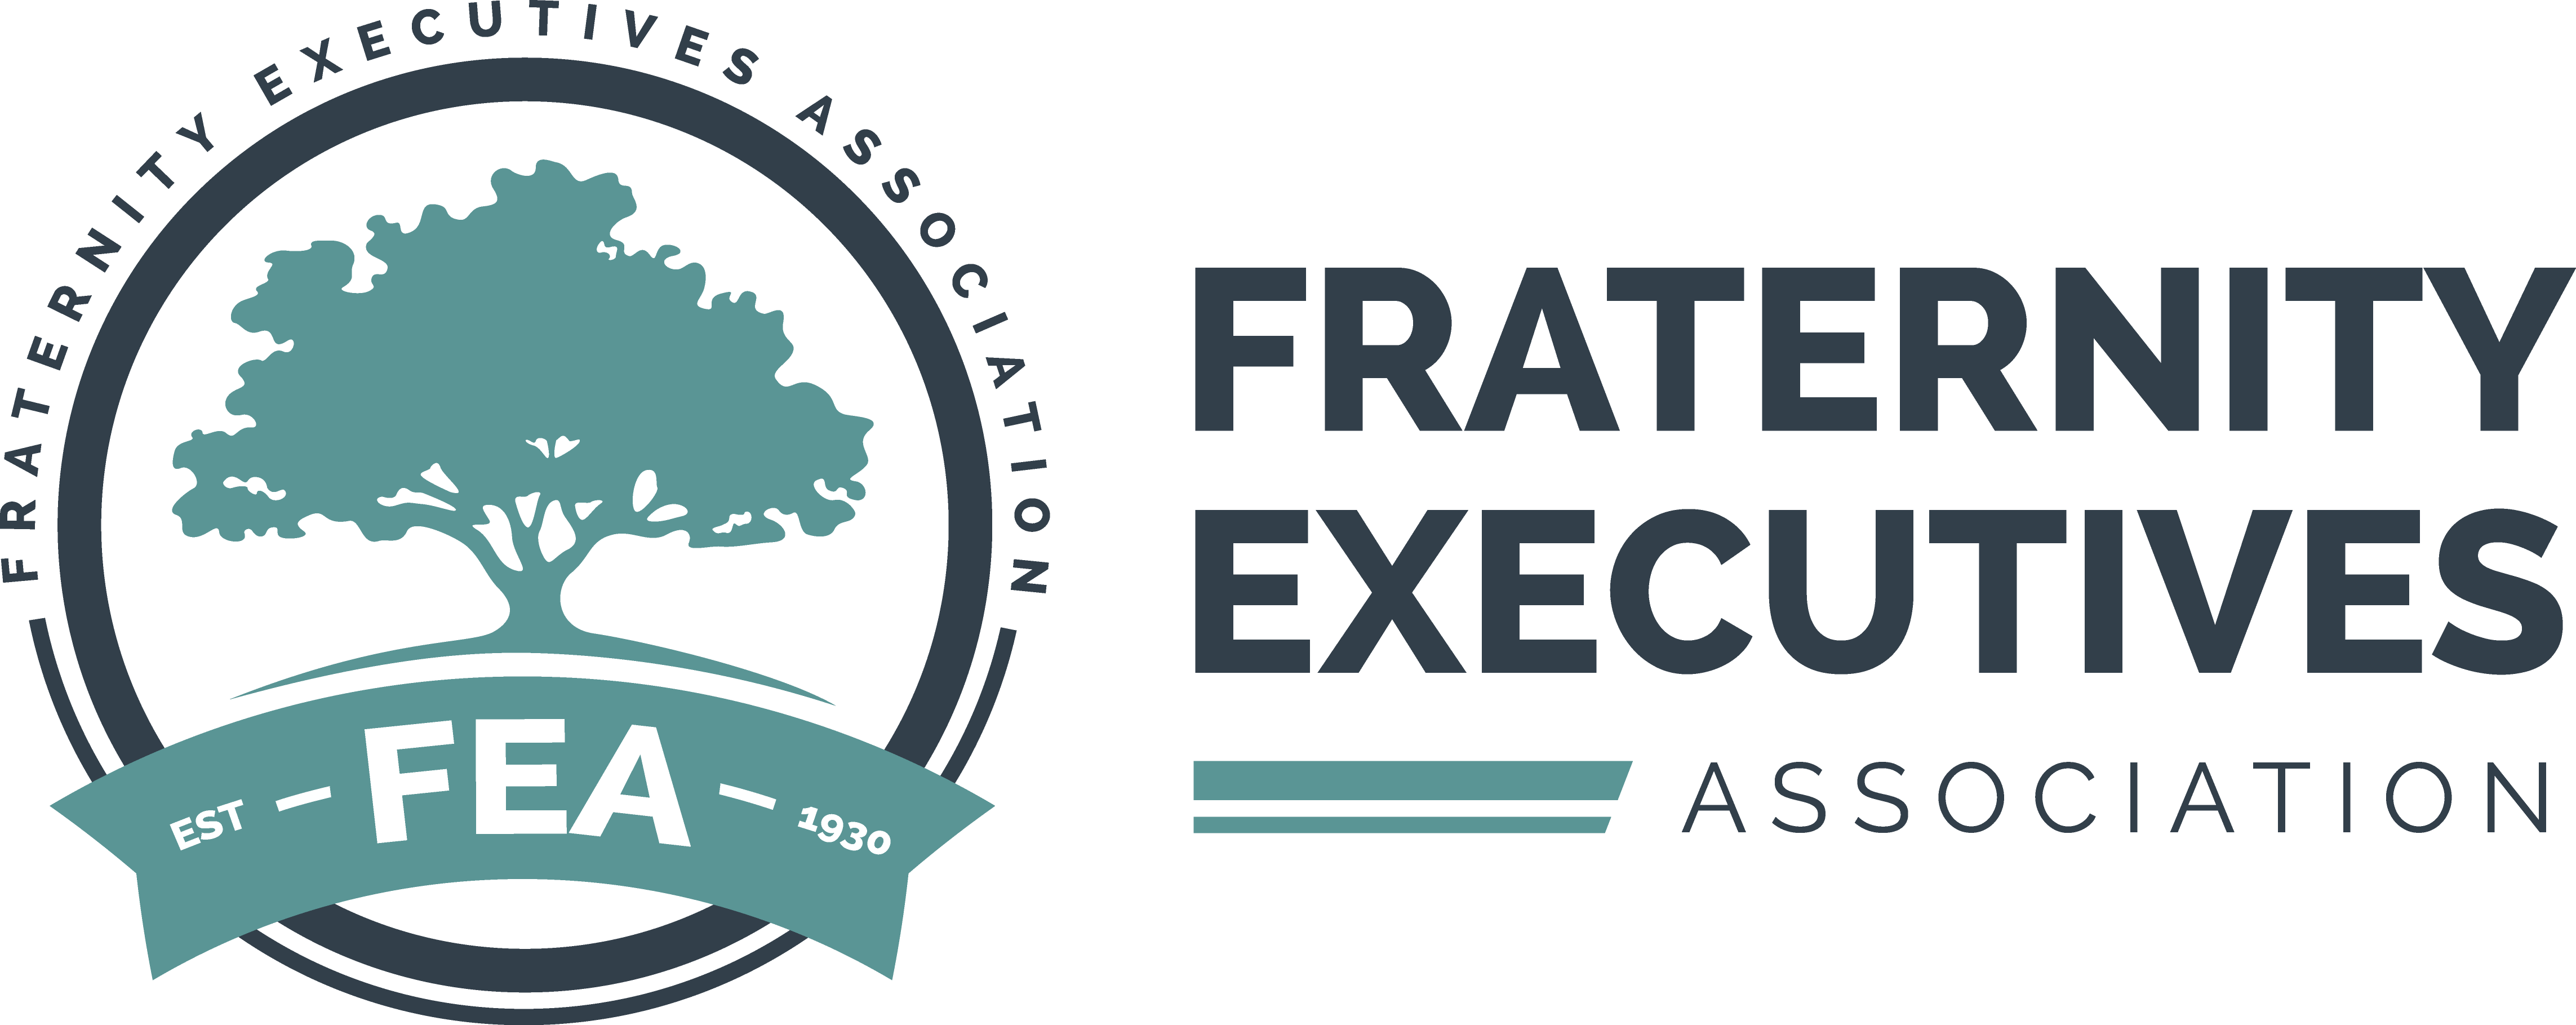 Association Logo - Fraternity Executives Association